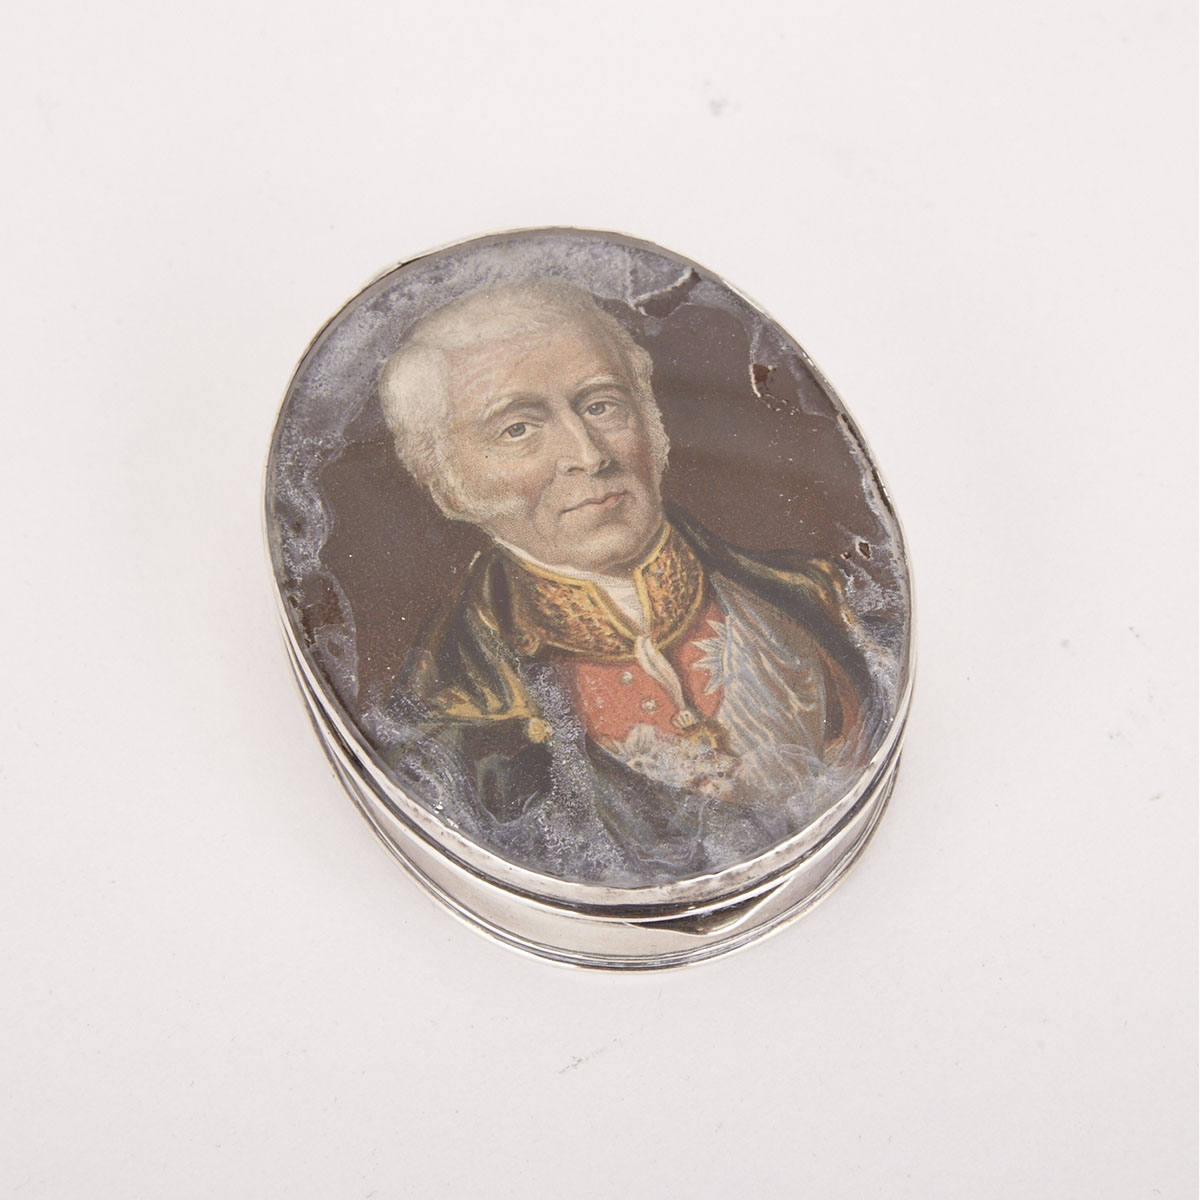 English Silver Arthur Wellesley, 1st Duke of Wellington Portrait Miniature Snuff Box, 19th century